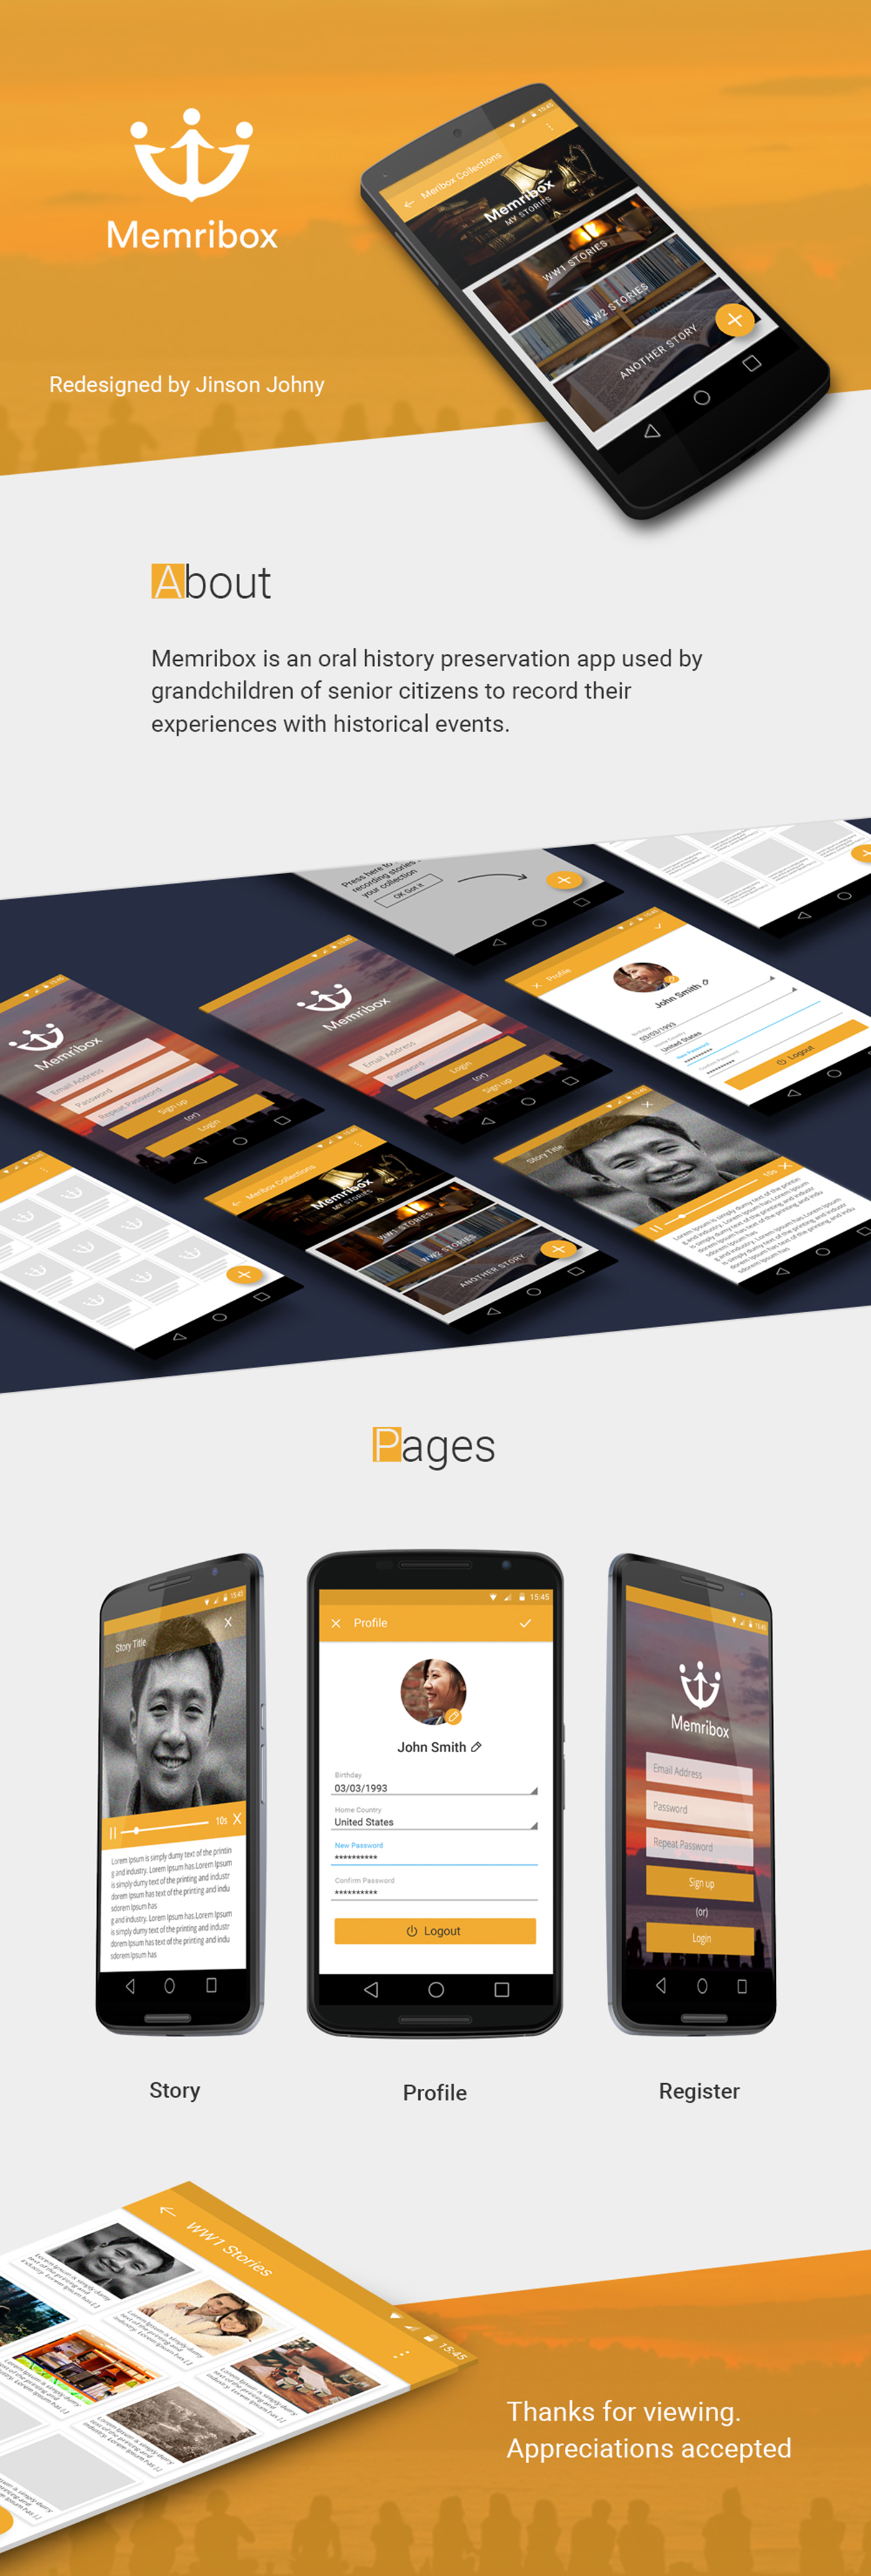 material design Memribox Android App Jinson Johny redesign photo app